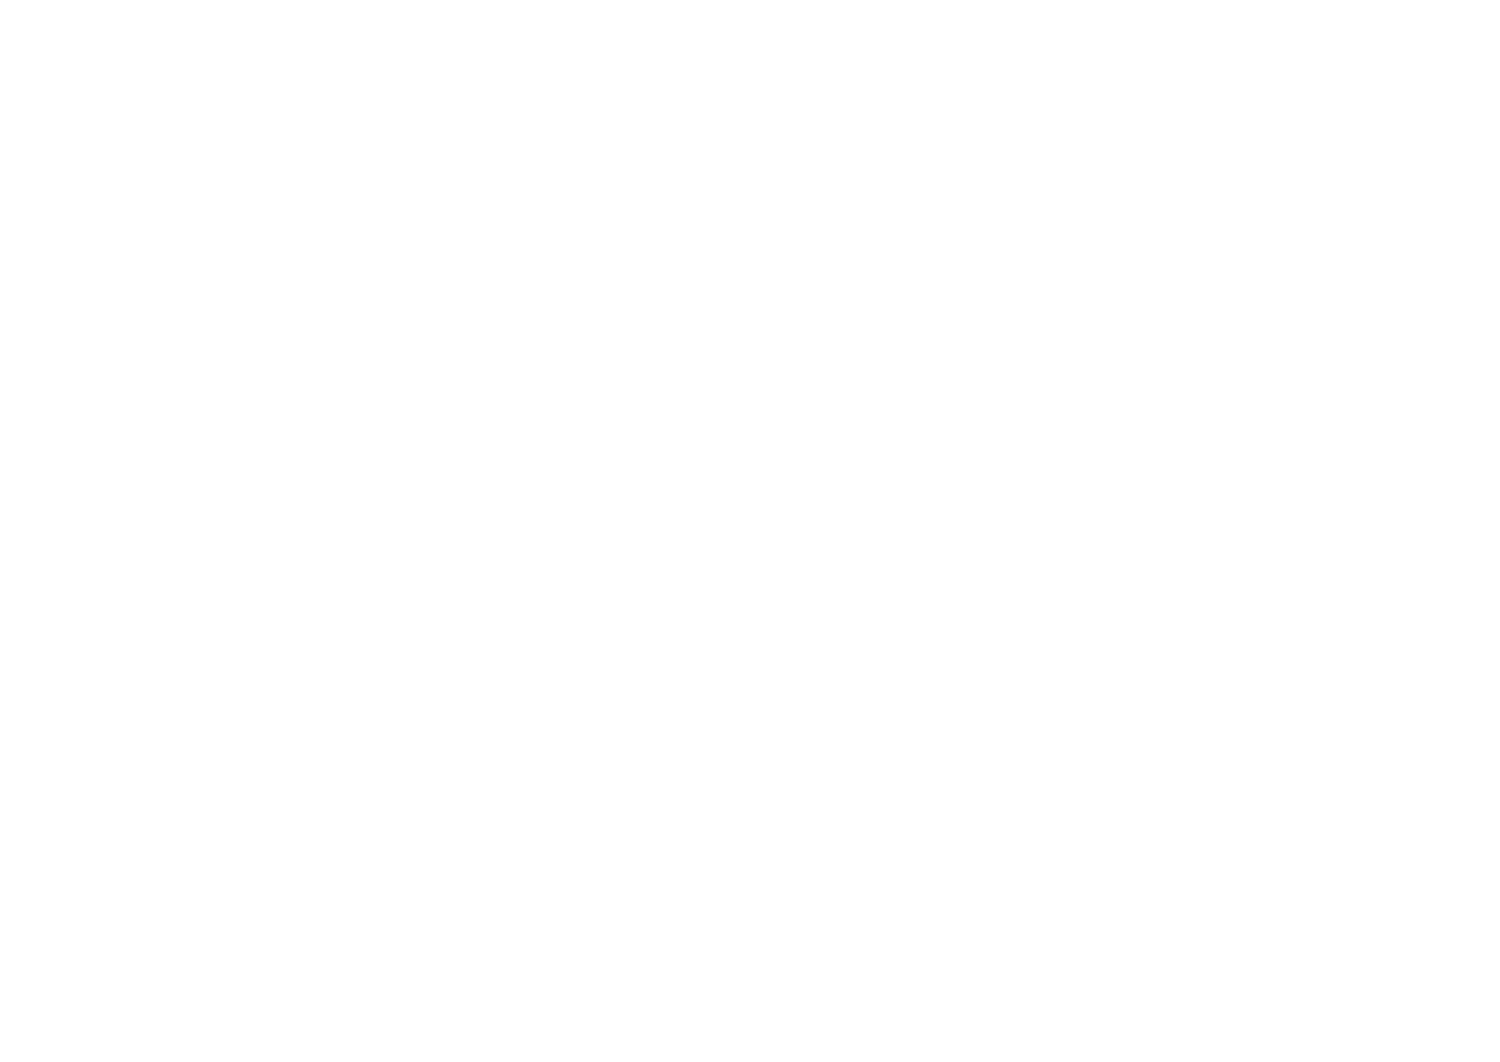 Mission Bowling Club